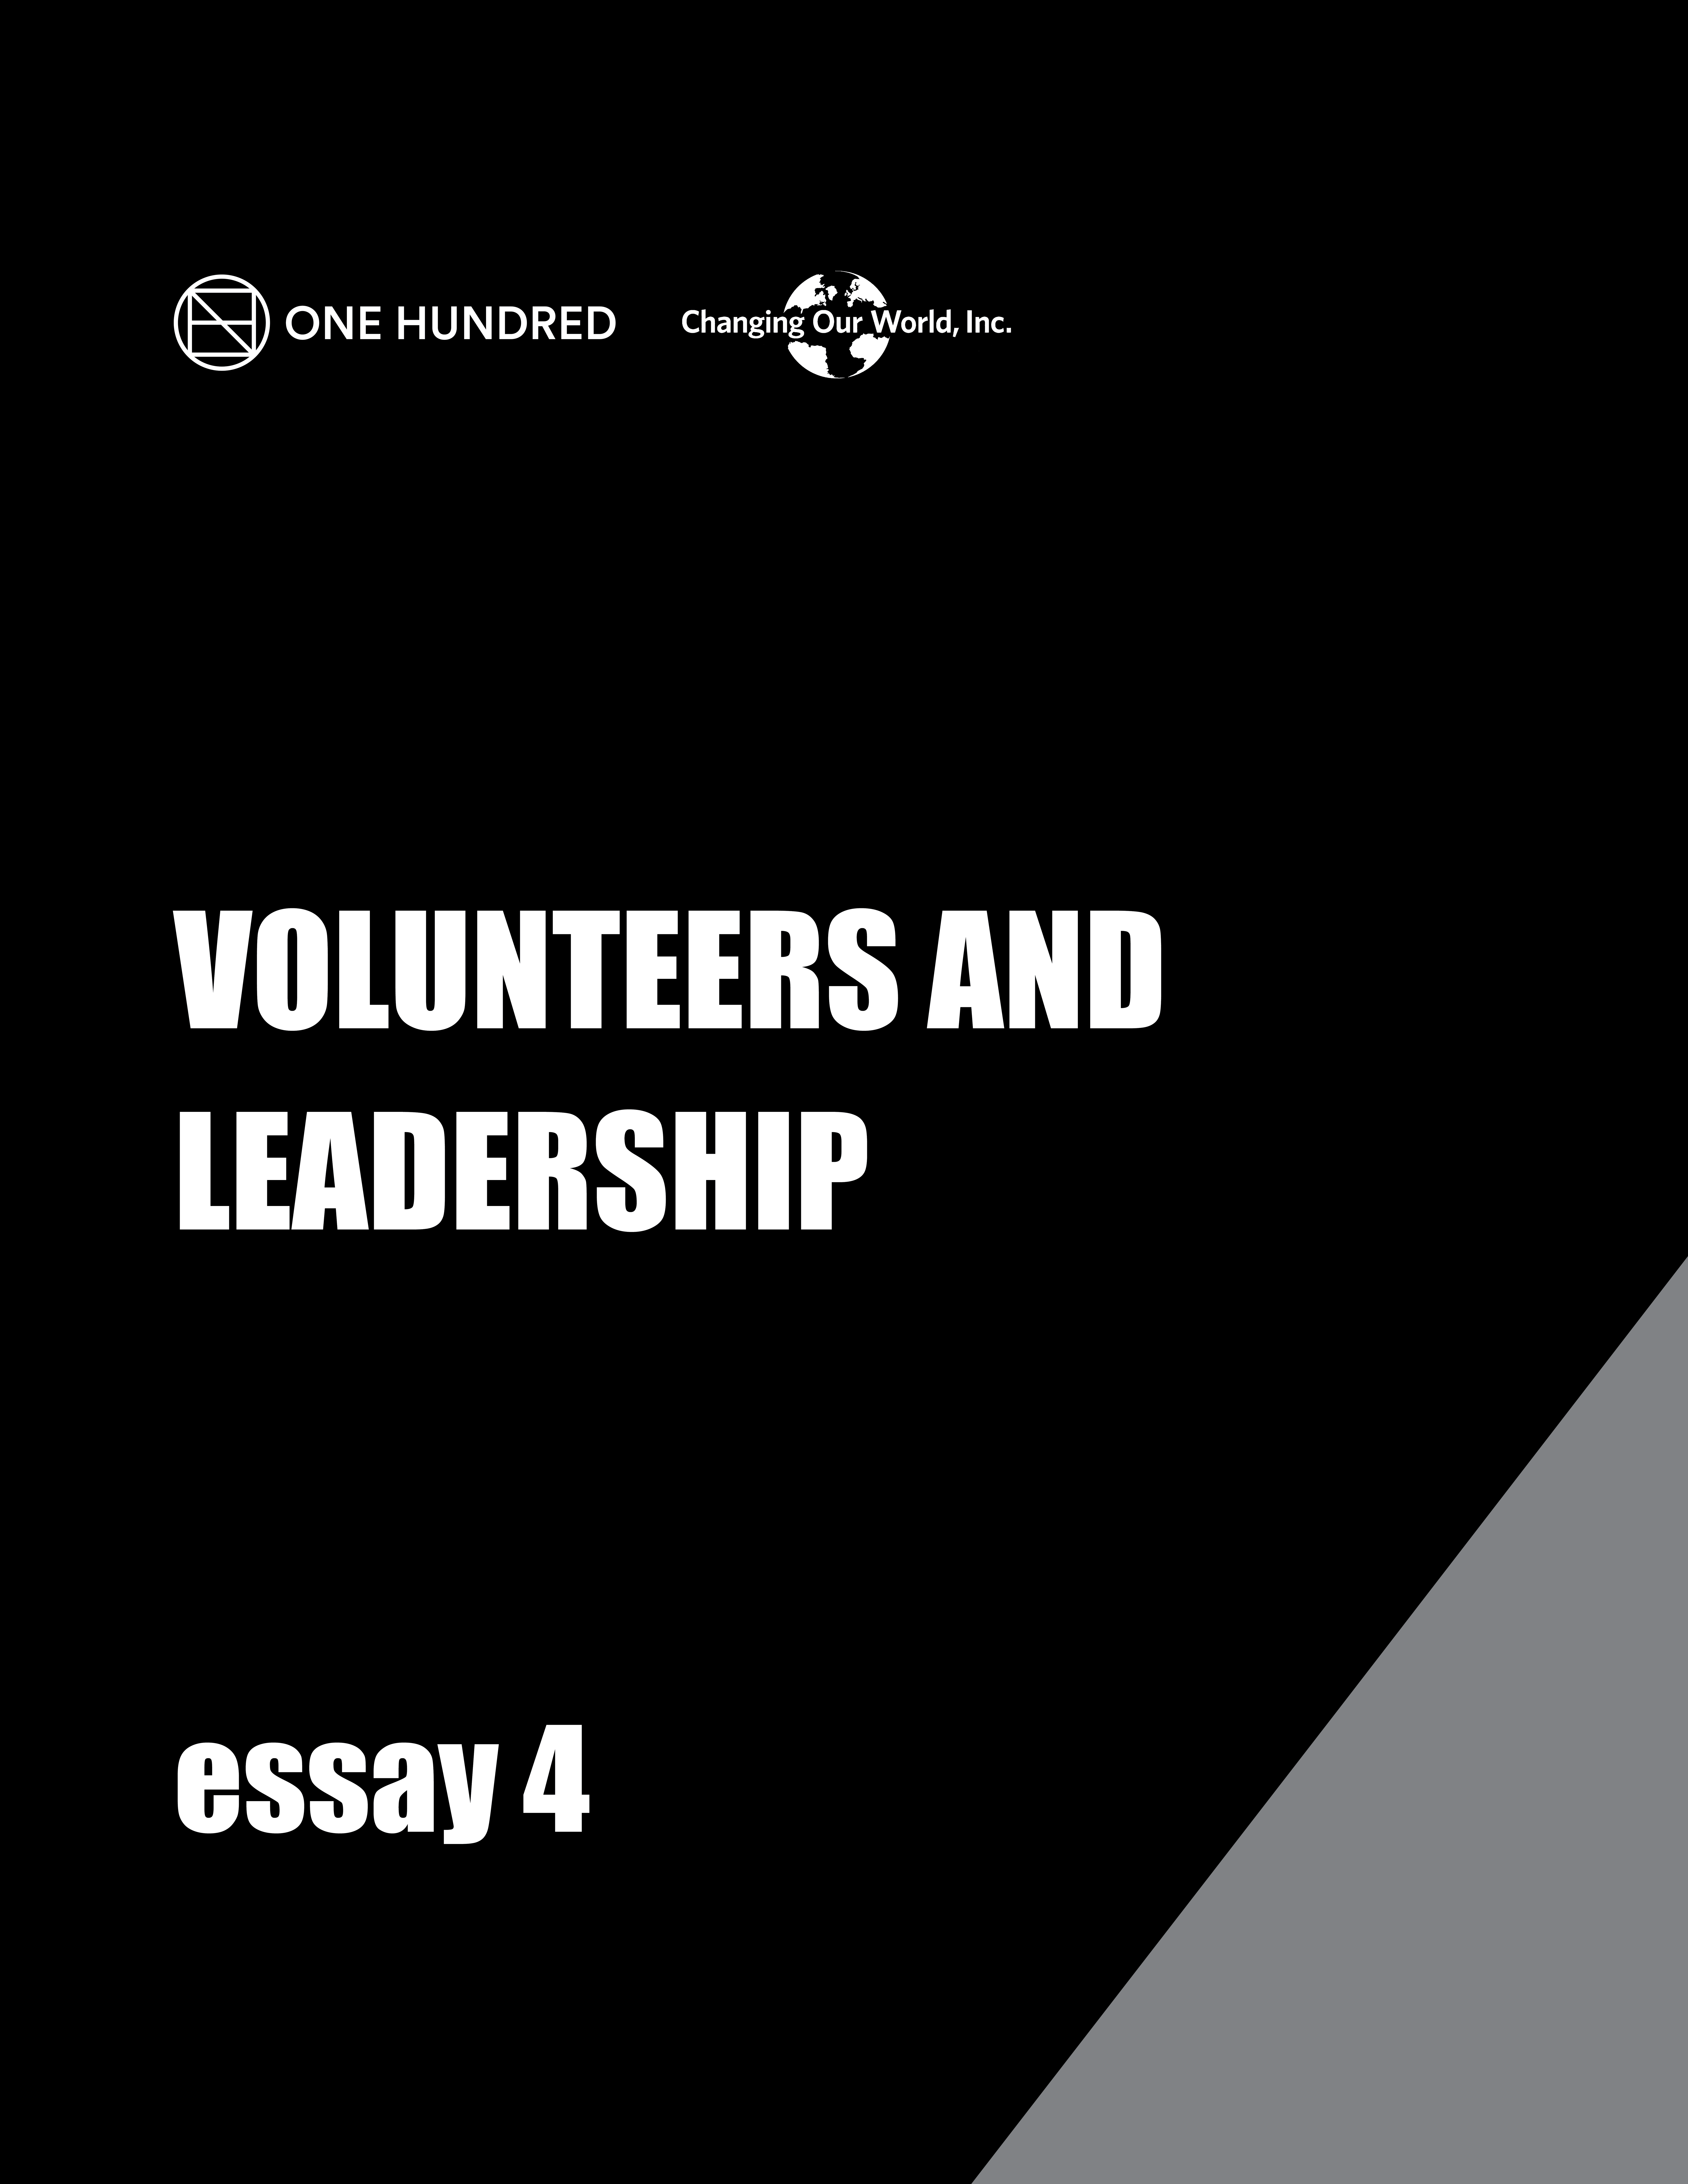 Volunteers and leadership essay 4.